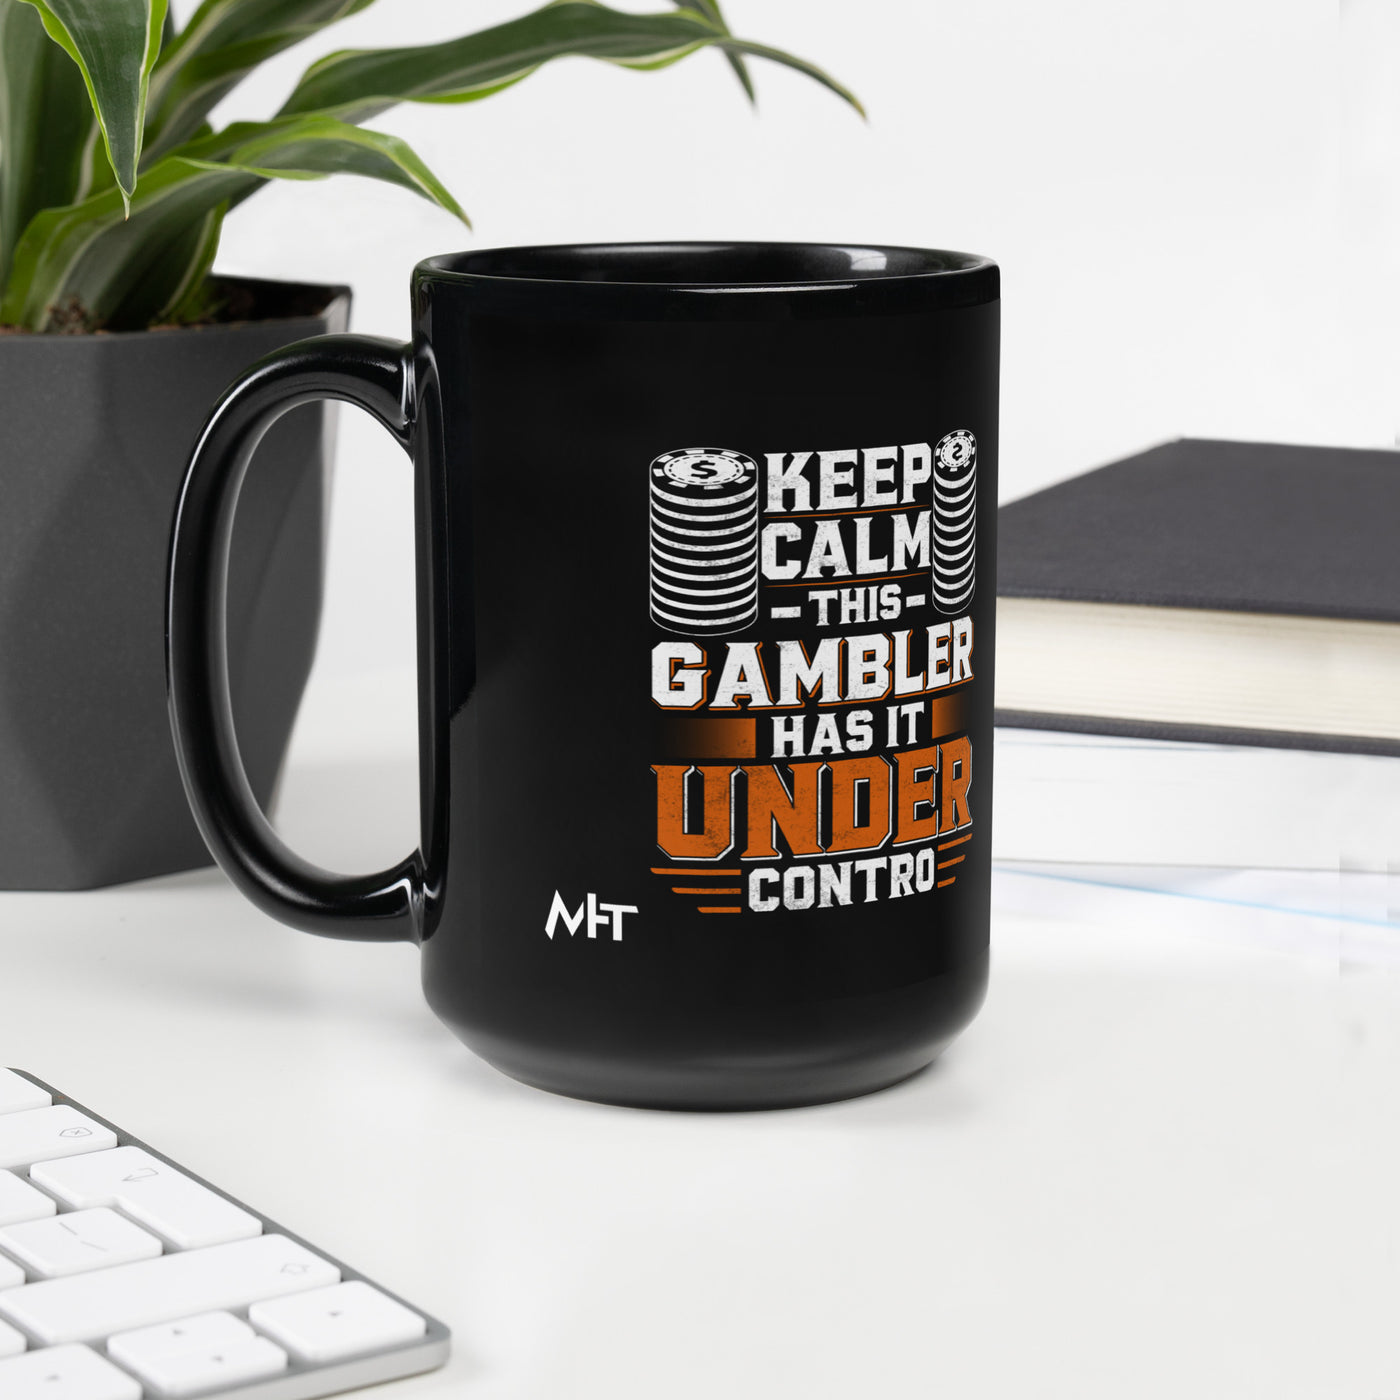 Keep Calm: This Gambler Has it under Control - Black Glossy Mug